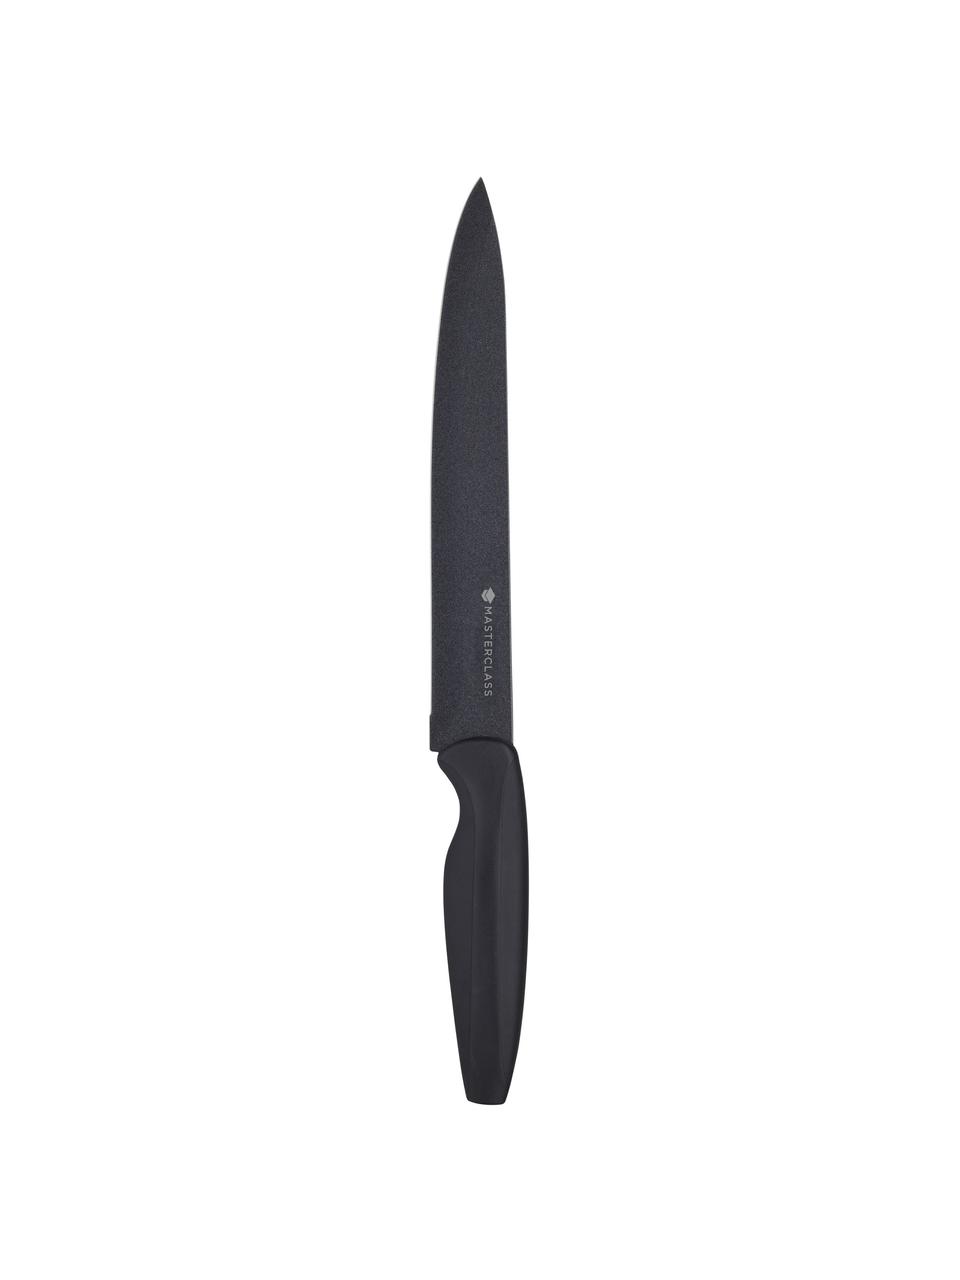 Set de cuchillos Master Agudo, 6 pzas., Cuchillo: acero inoxidable con reve, Negro, Set de diferentes tamaños